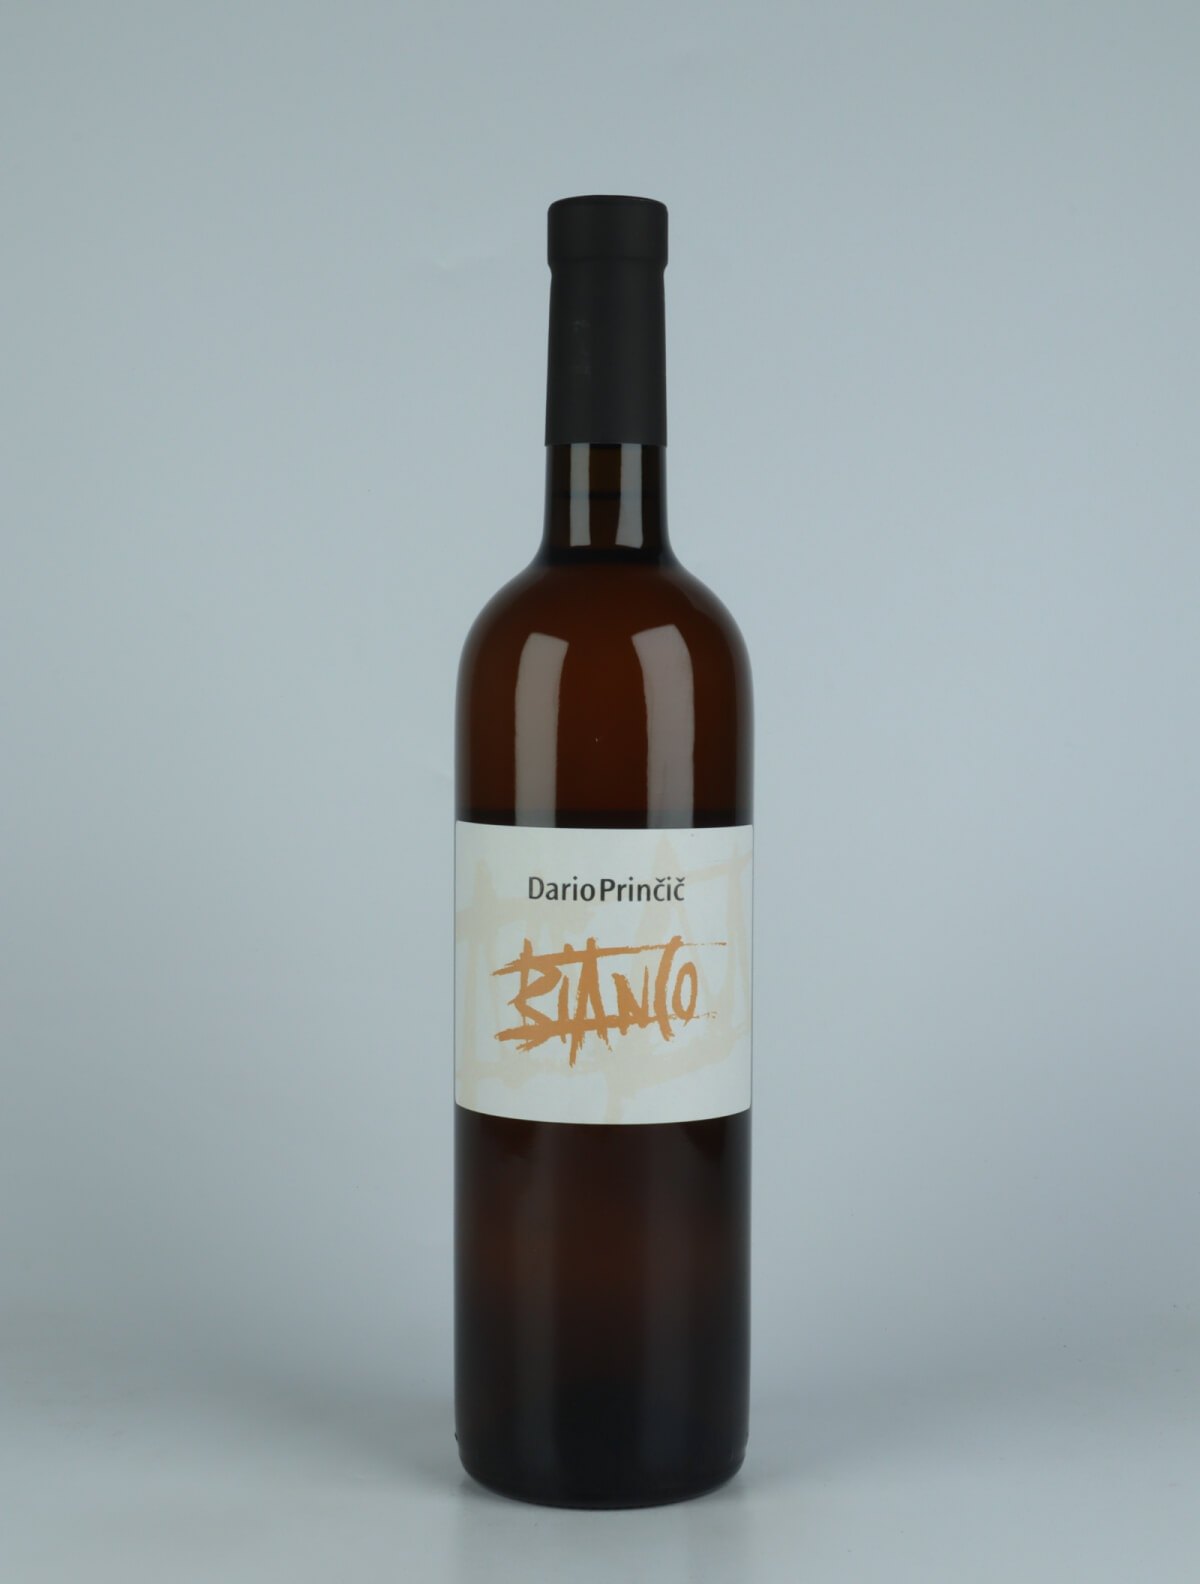 En flaske N.V. Bianco (Lot 22) Orange vin fra Dario Princic, Friuli i Italien